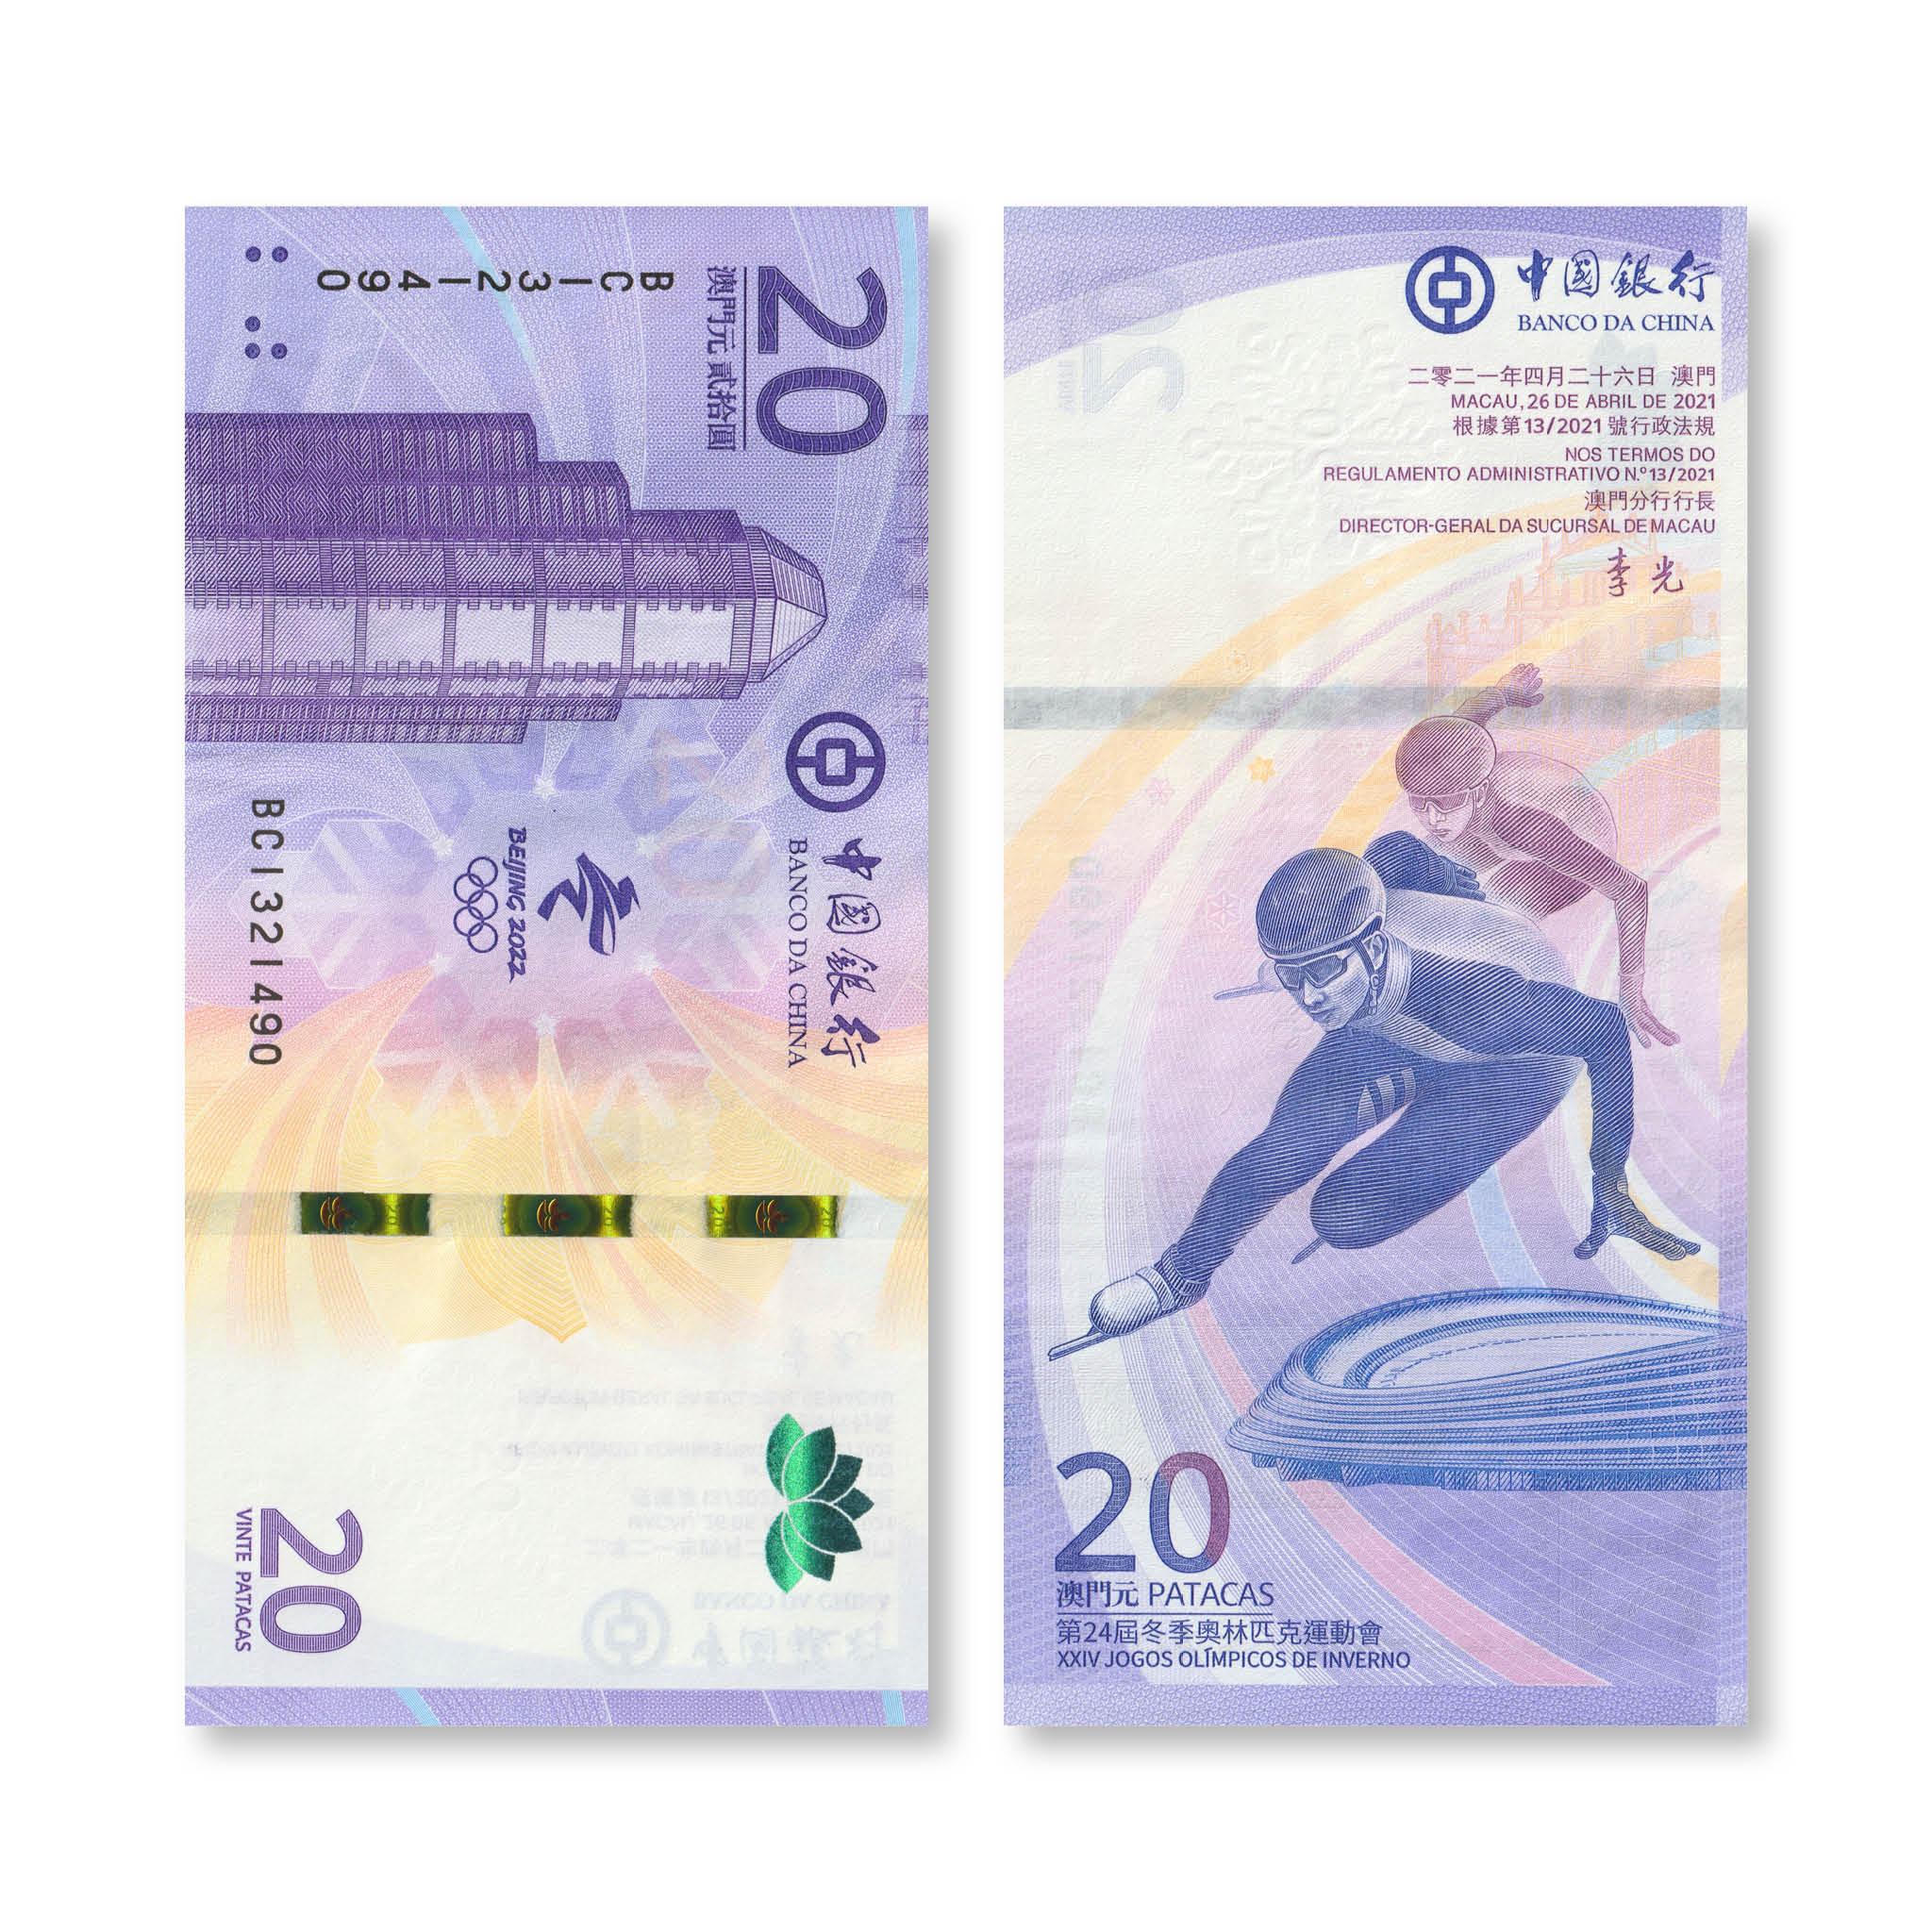 Macau 20 Patacas, 2021 Olympic Commemorative, B236a, UNC - Robert's World Money - World Banknotes